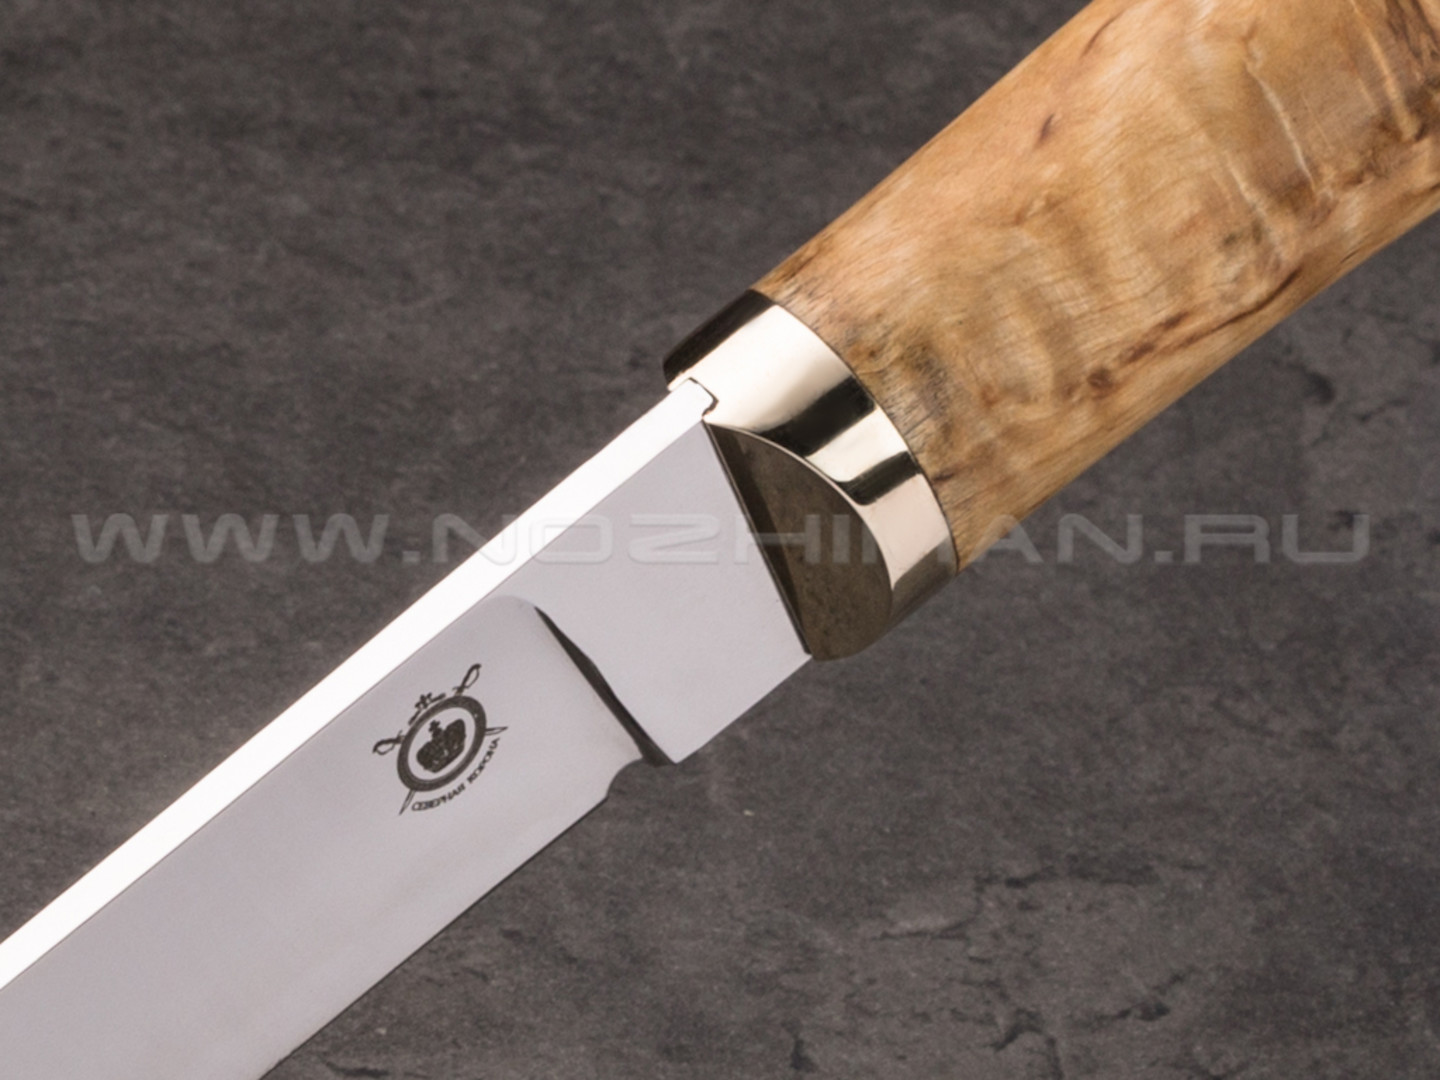 Нож "Лис" Bohler N695, карельская береза